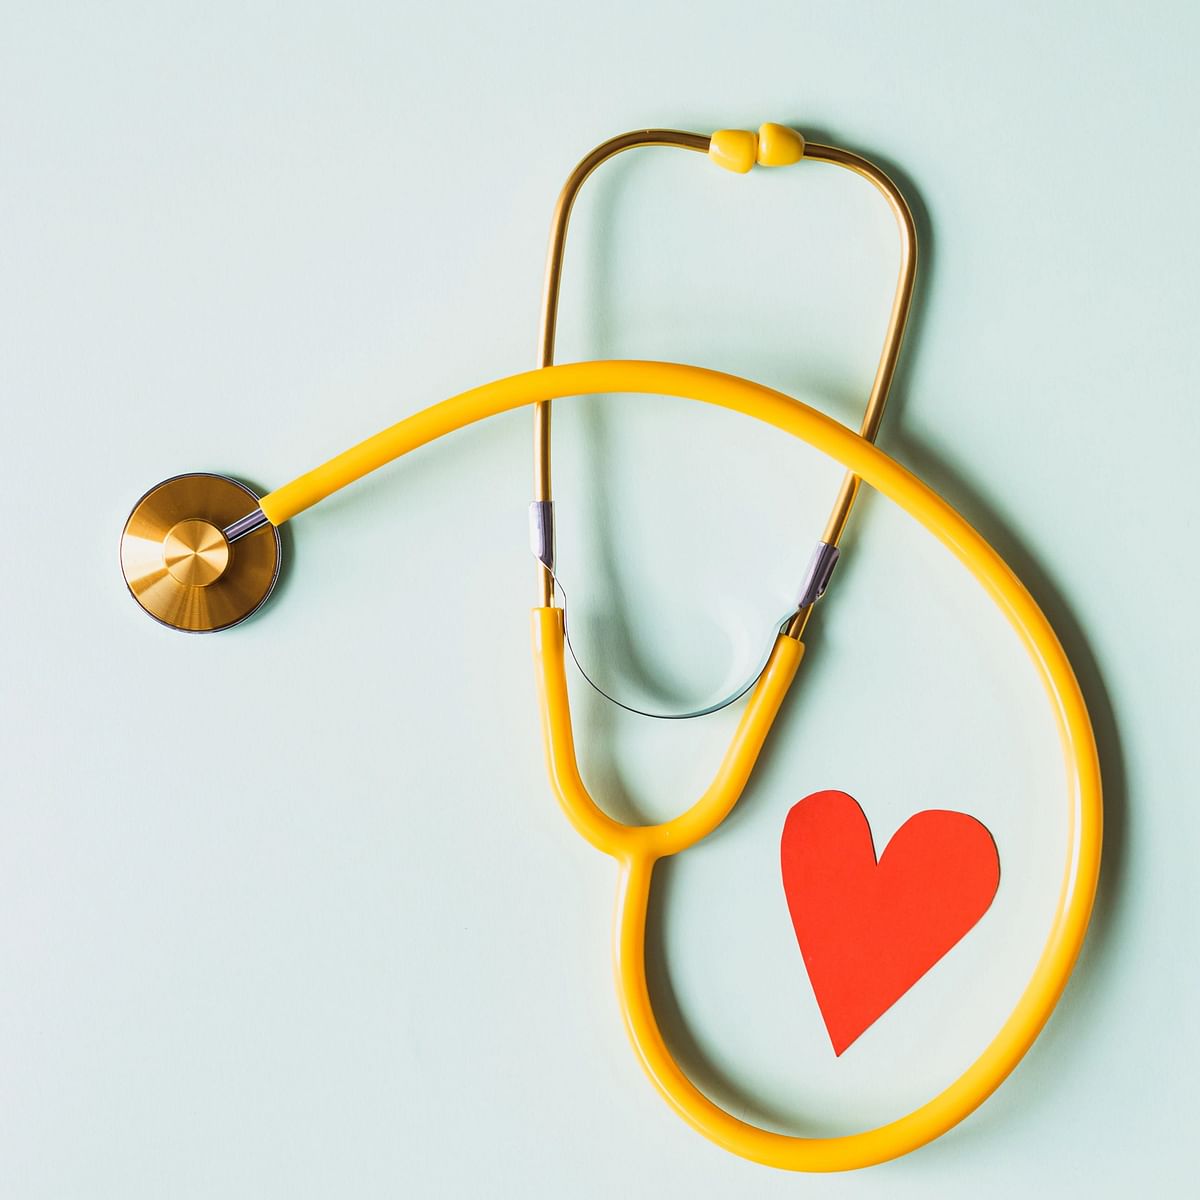 Heart Care (Representatinal Image)